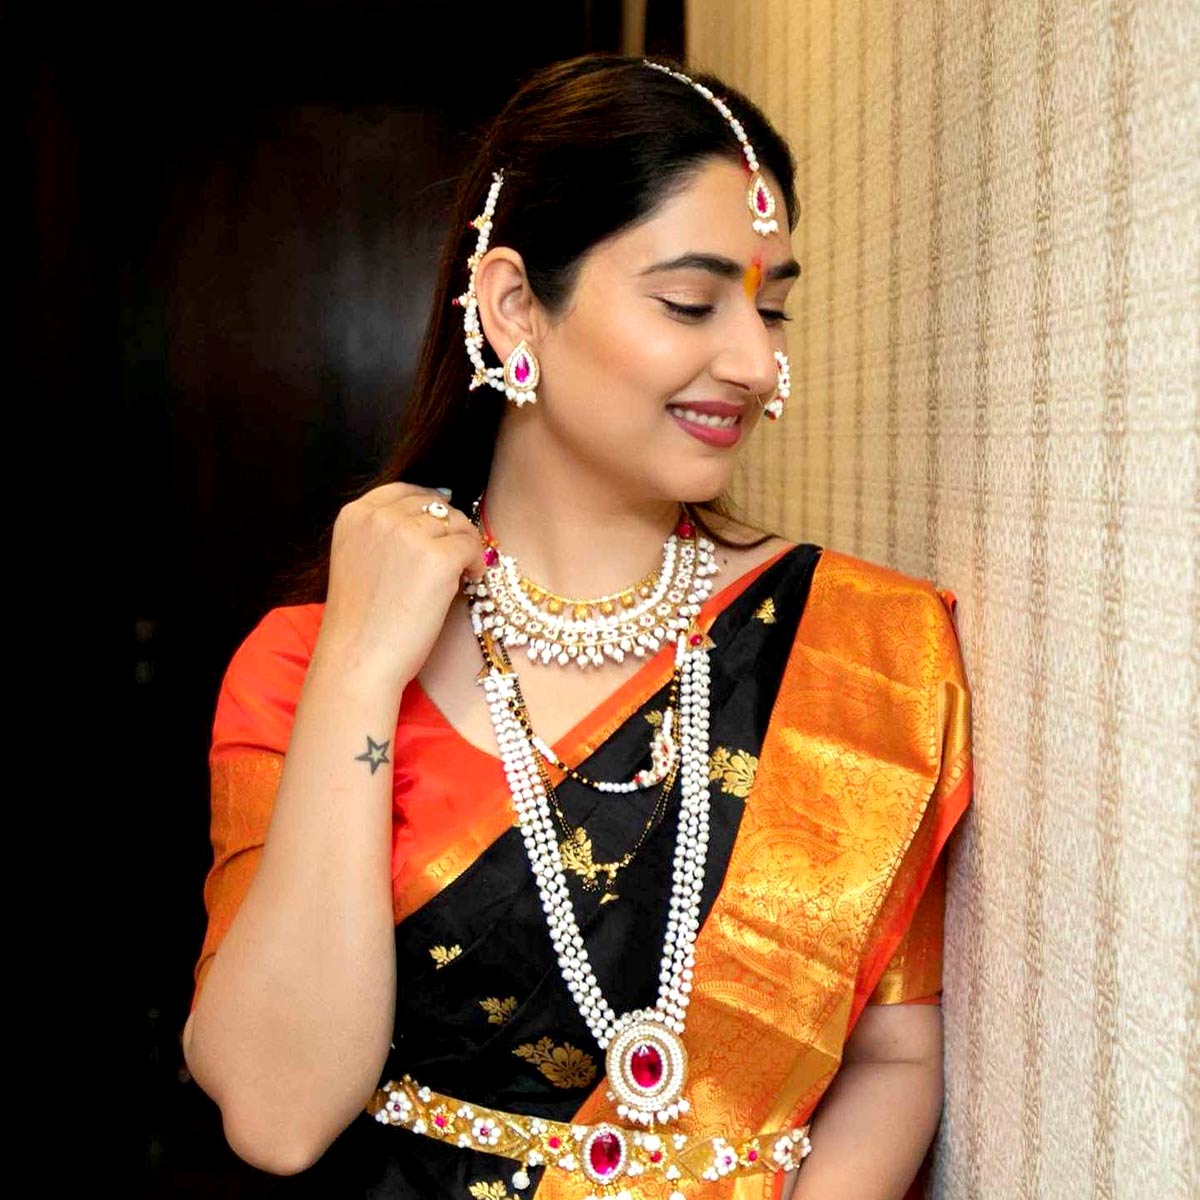 Makar Sankranti Saree For Women जिनमें आपको मिलेगा परफेक्ट देसी गर्ल लुक |  makar sankranti saree for women that gives you an elegant and a beautiful  festive look | HerZindagi